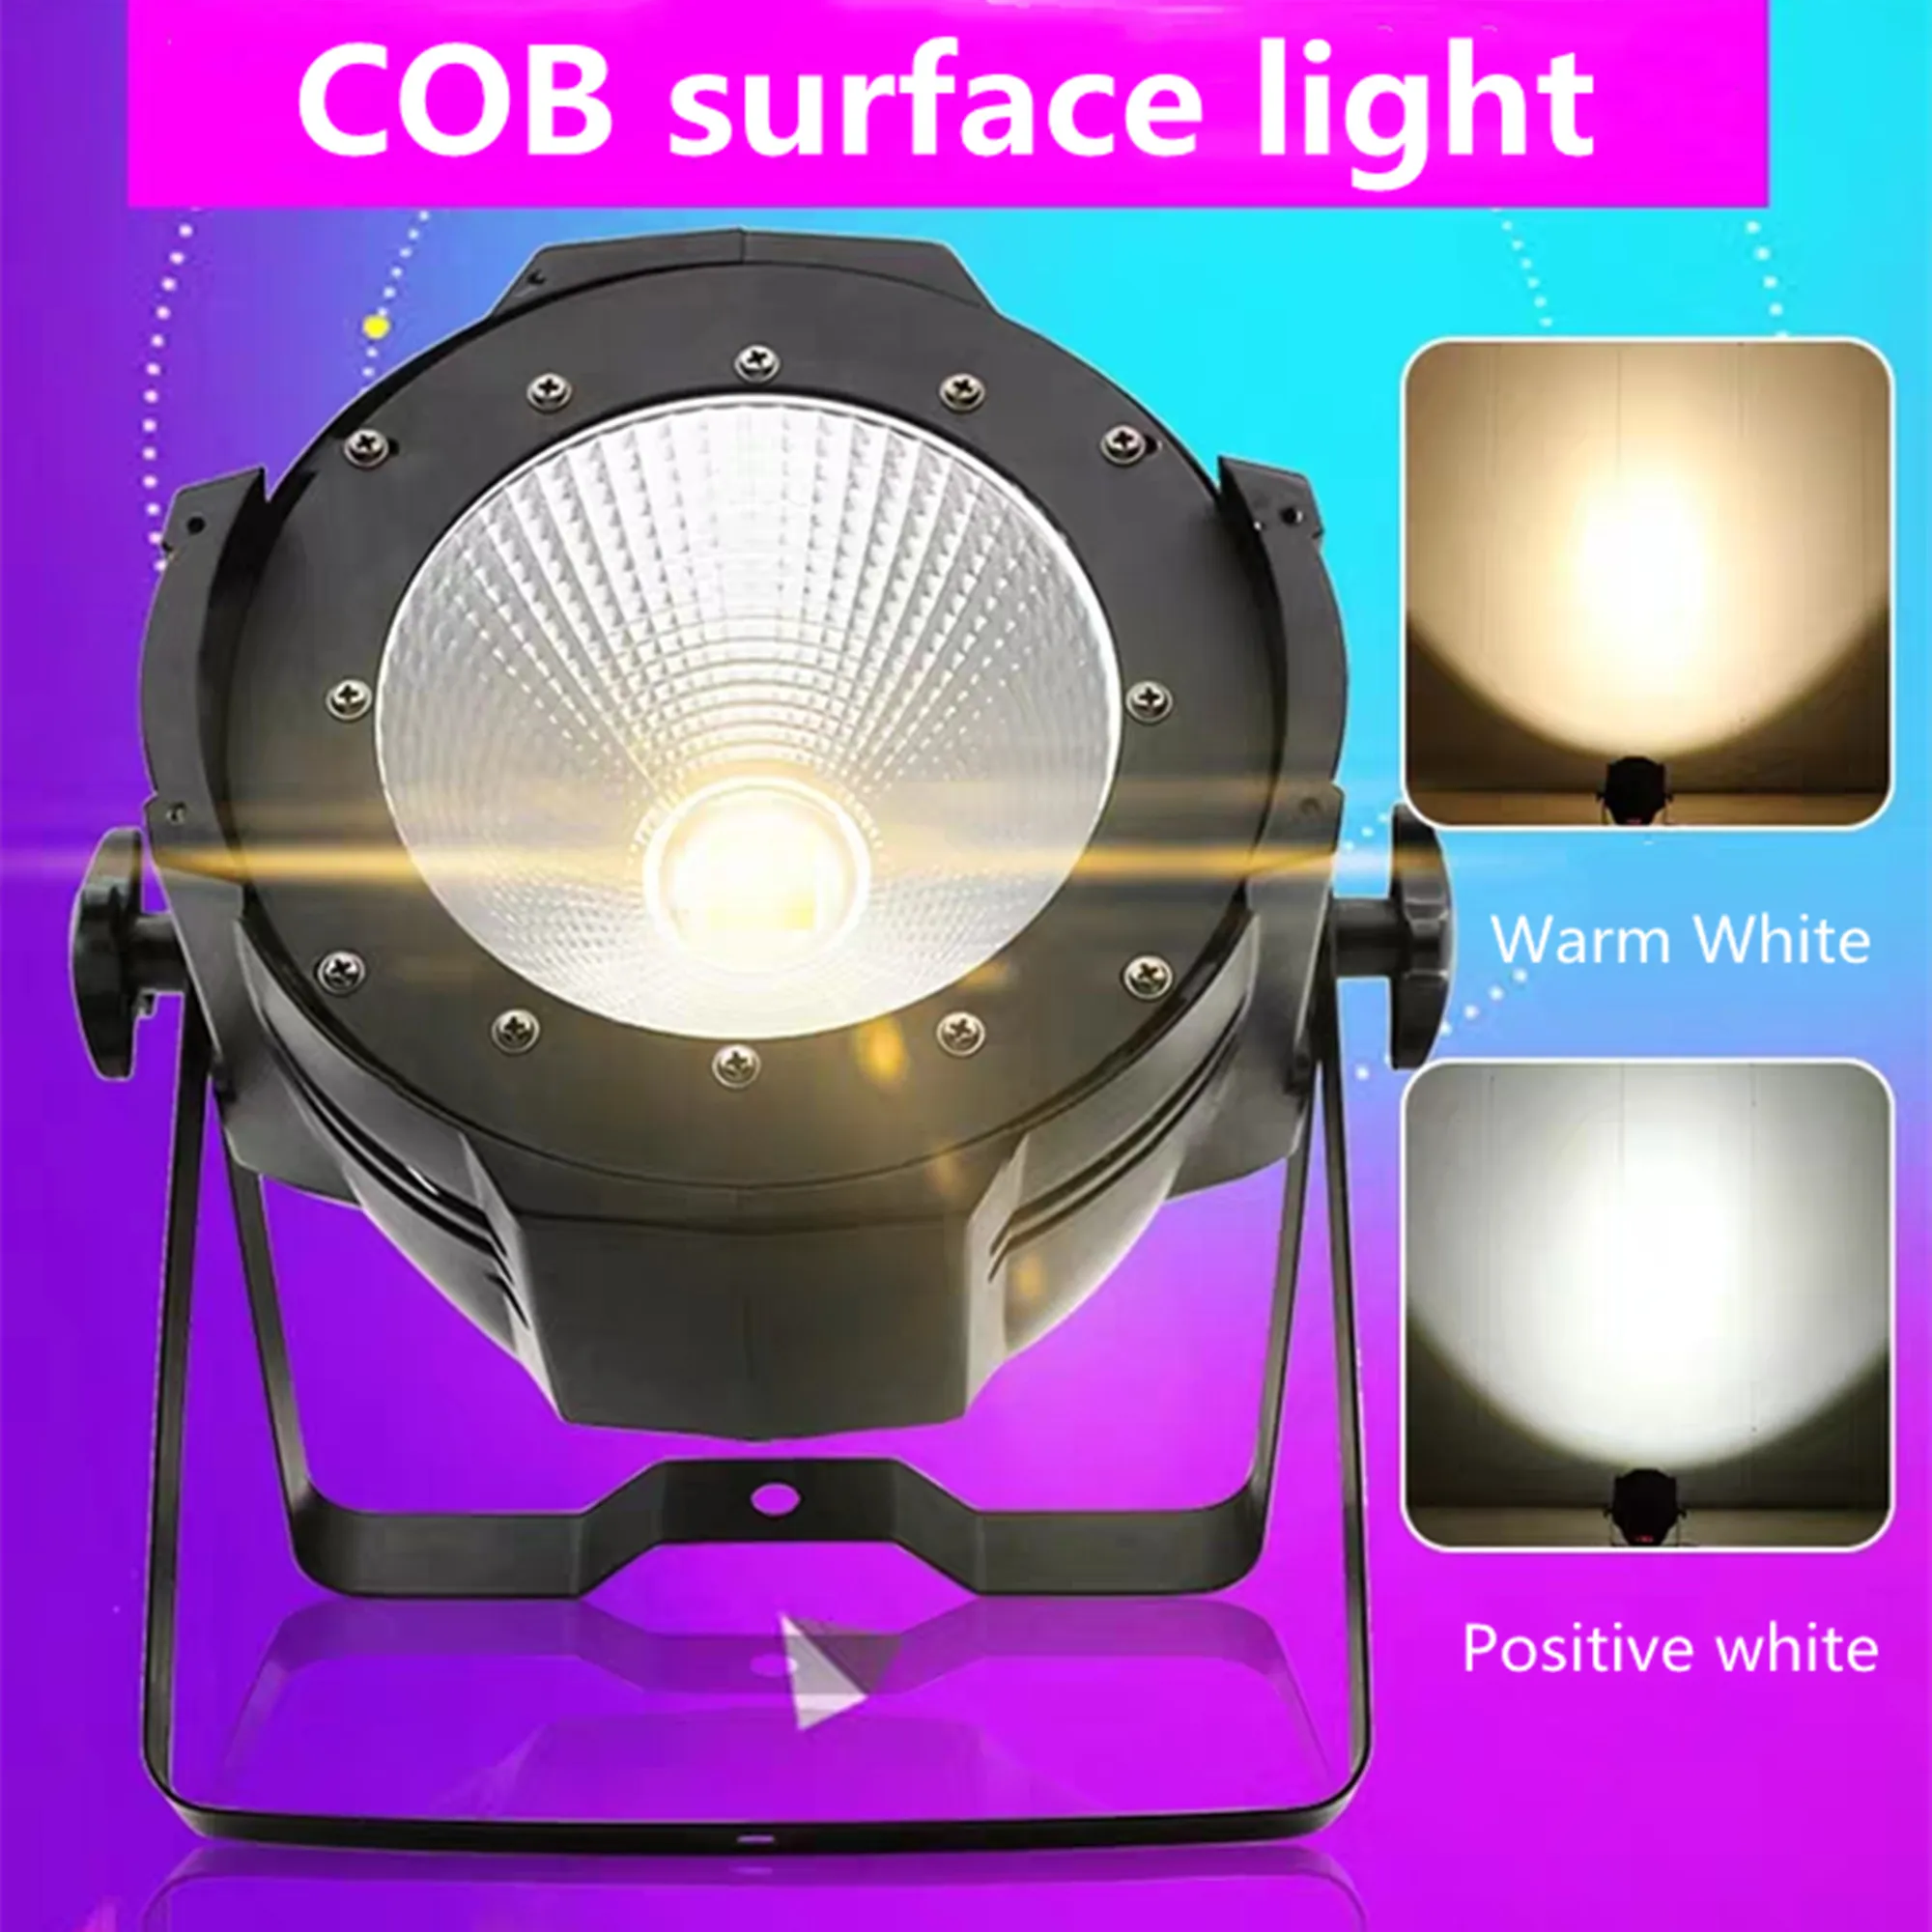 Led Par 100w COB warm white Lights led dmx control Surface light good for Performance wedding stage show party light